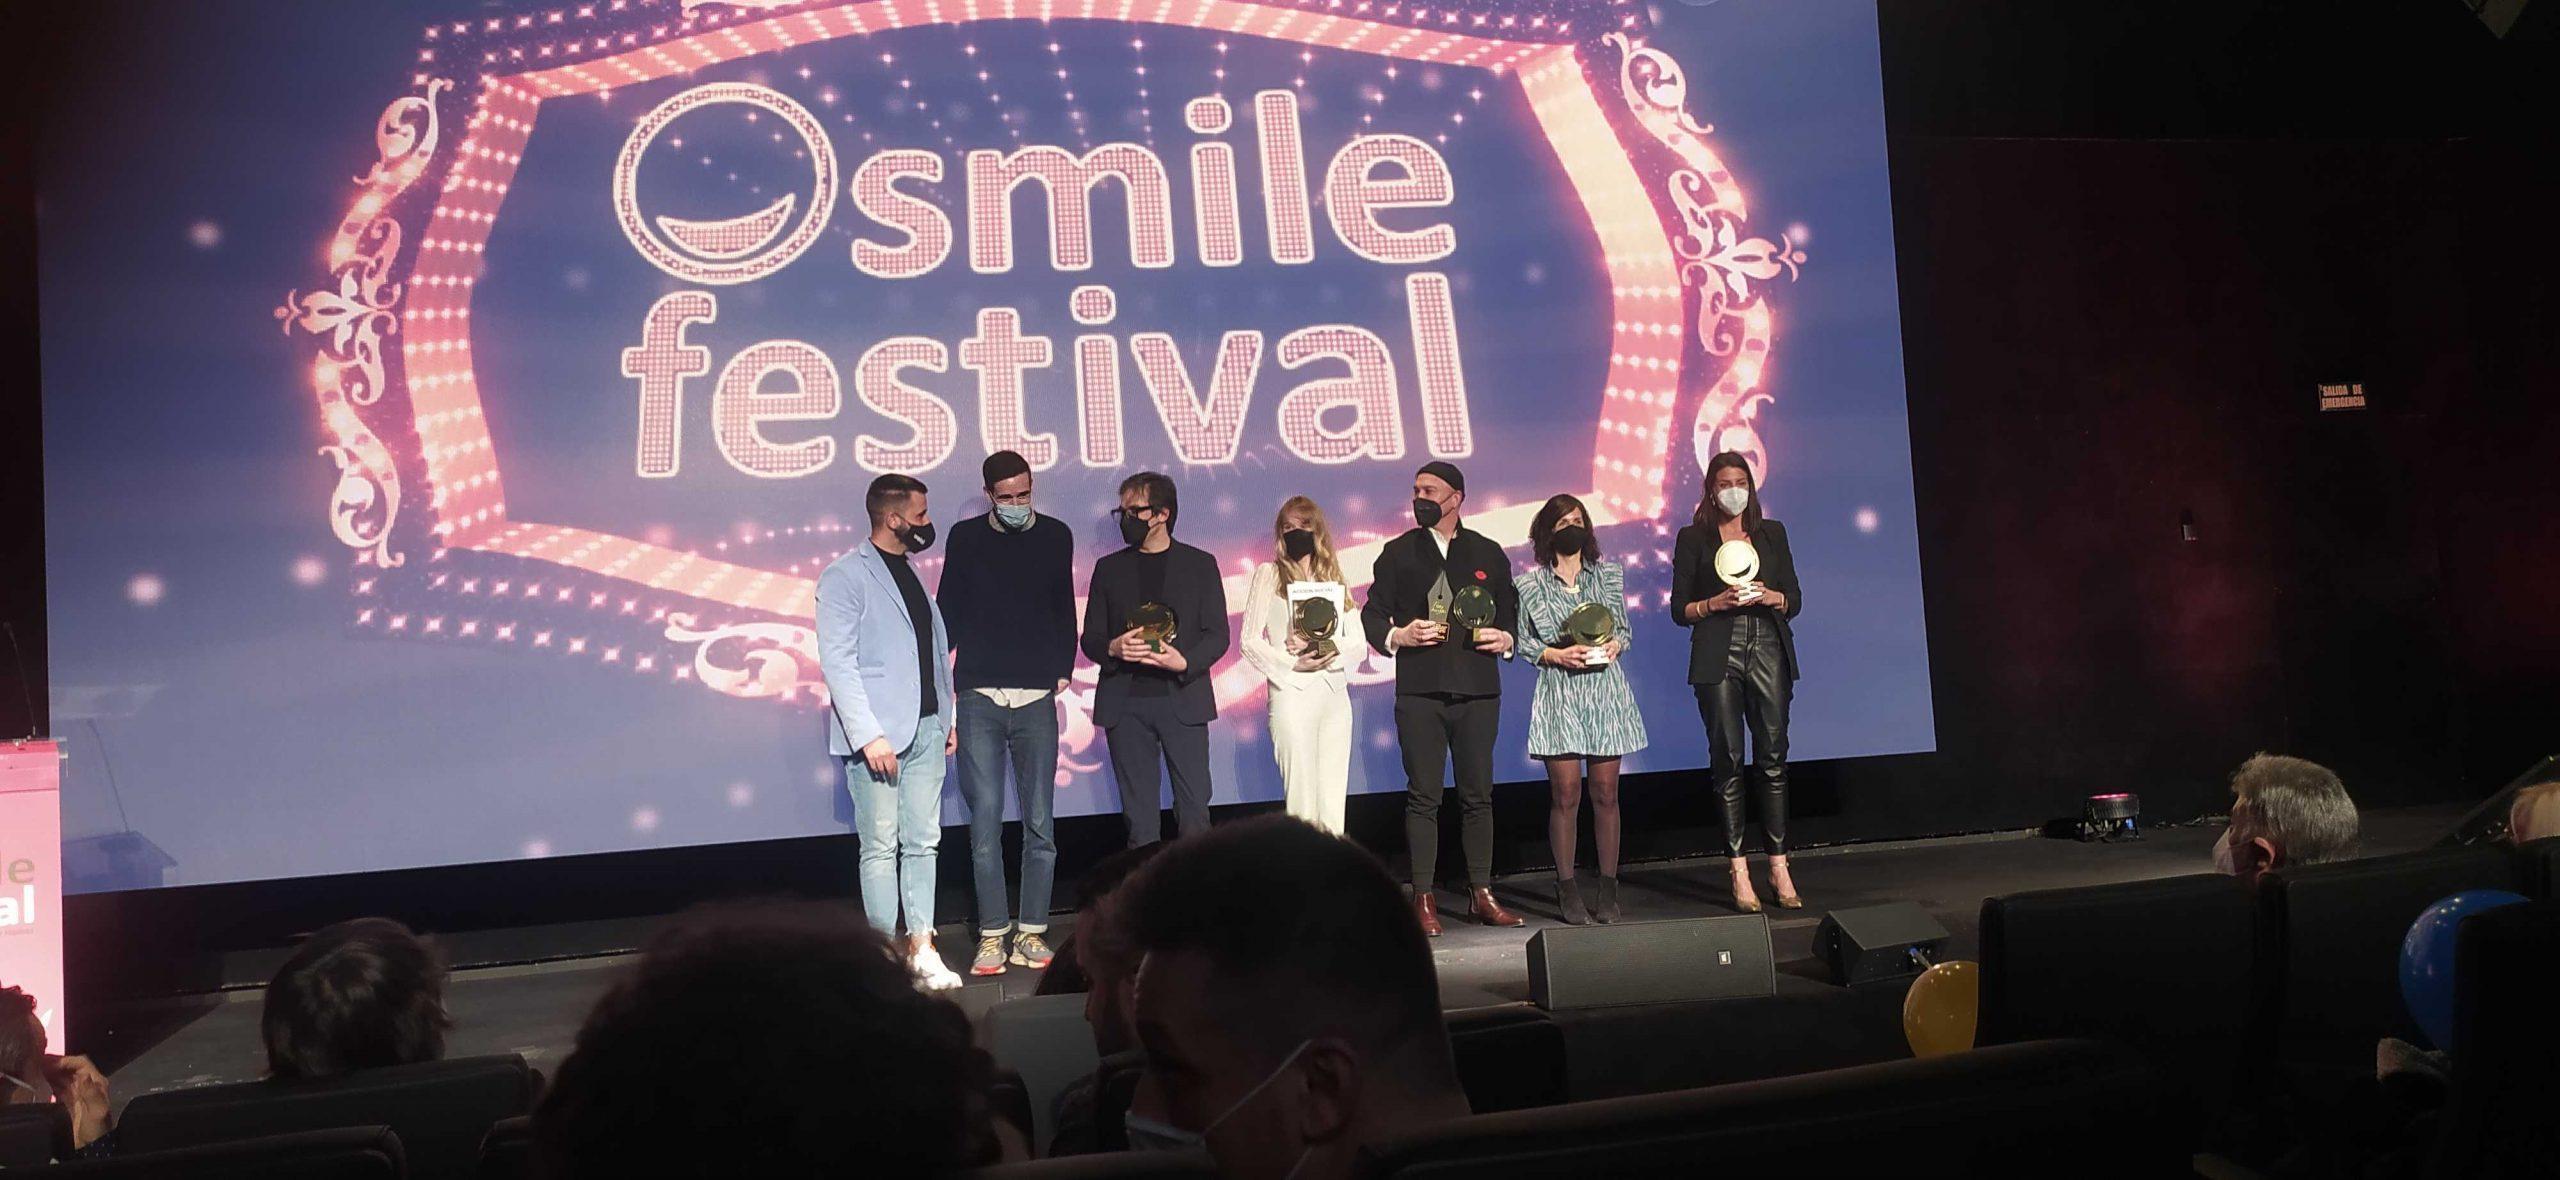 Smile Festival